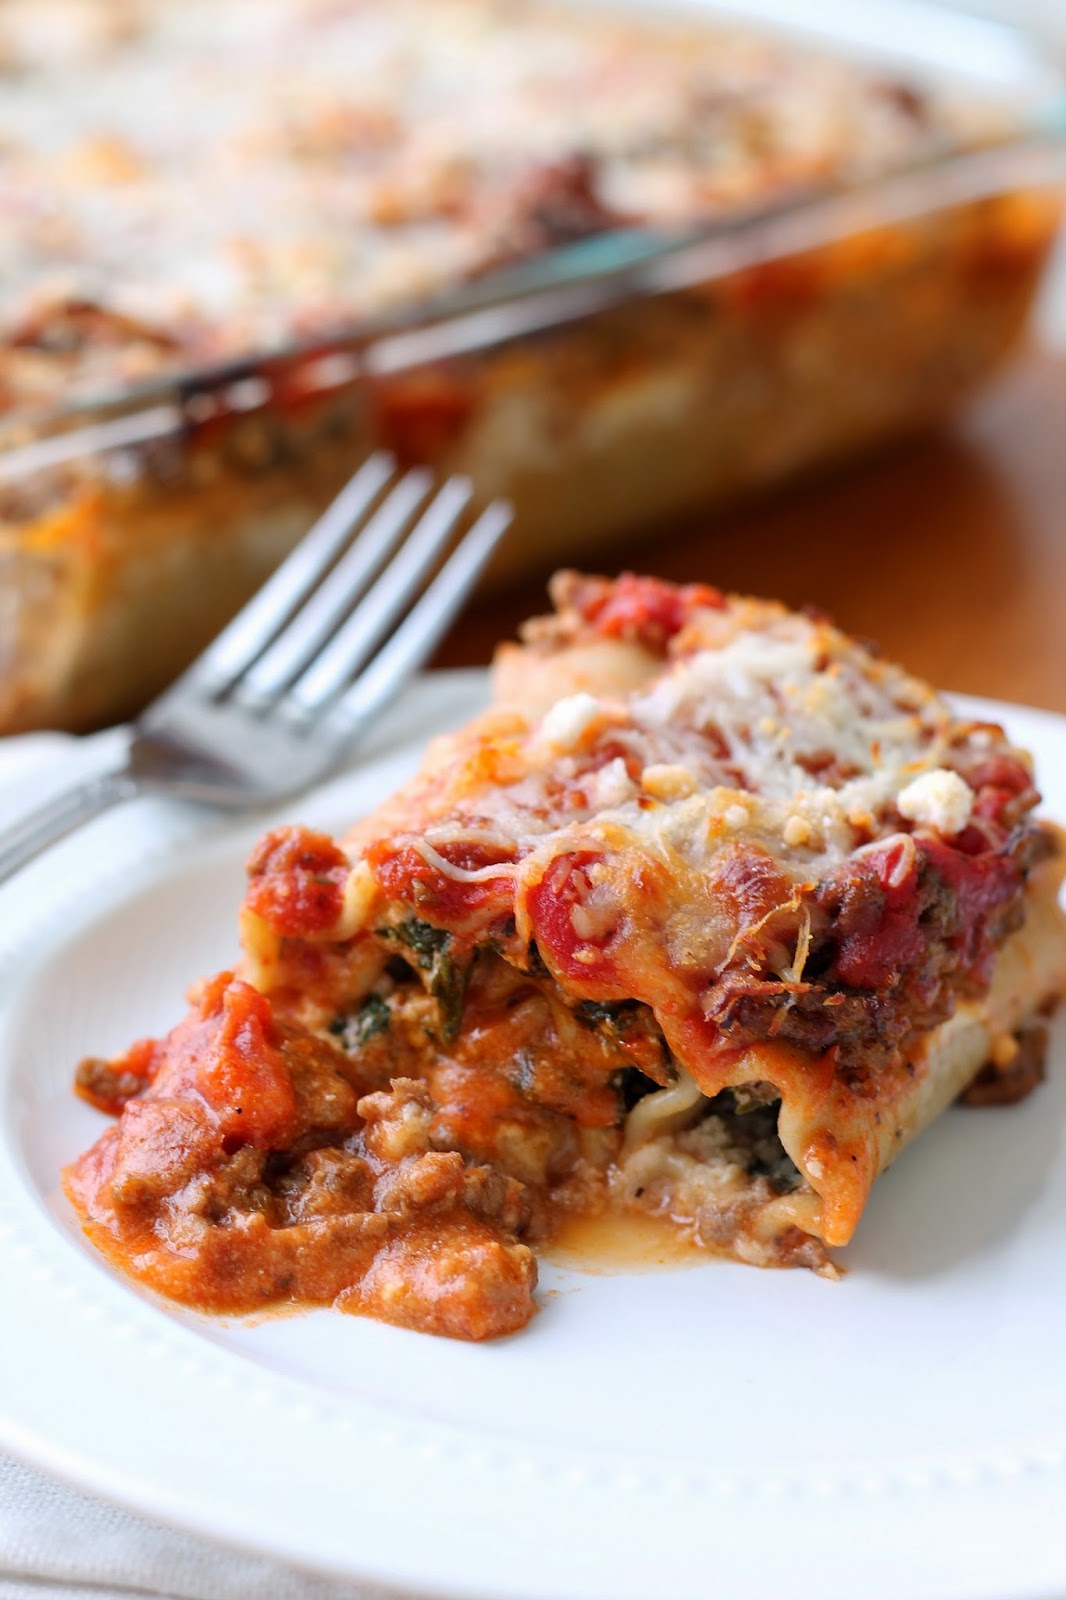 My Grandmother's Recipes - Lasagna Rolls via @labride